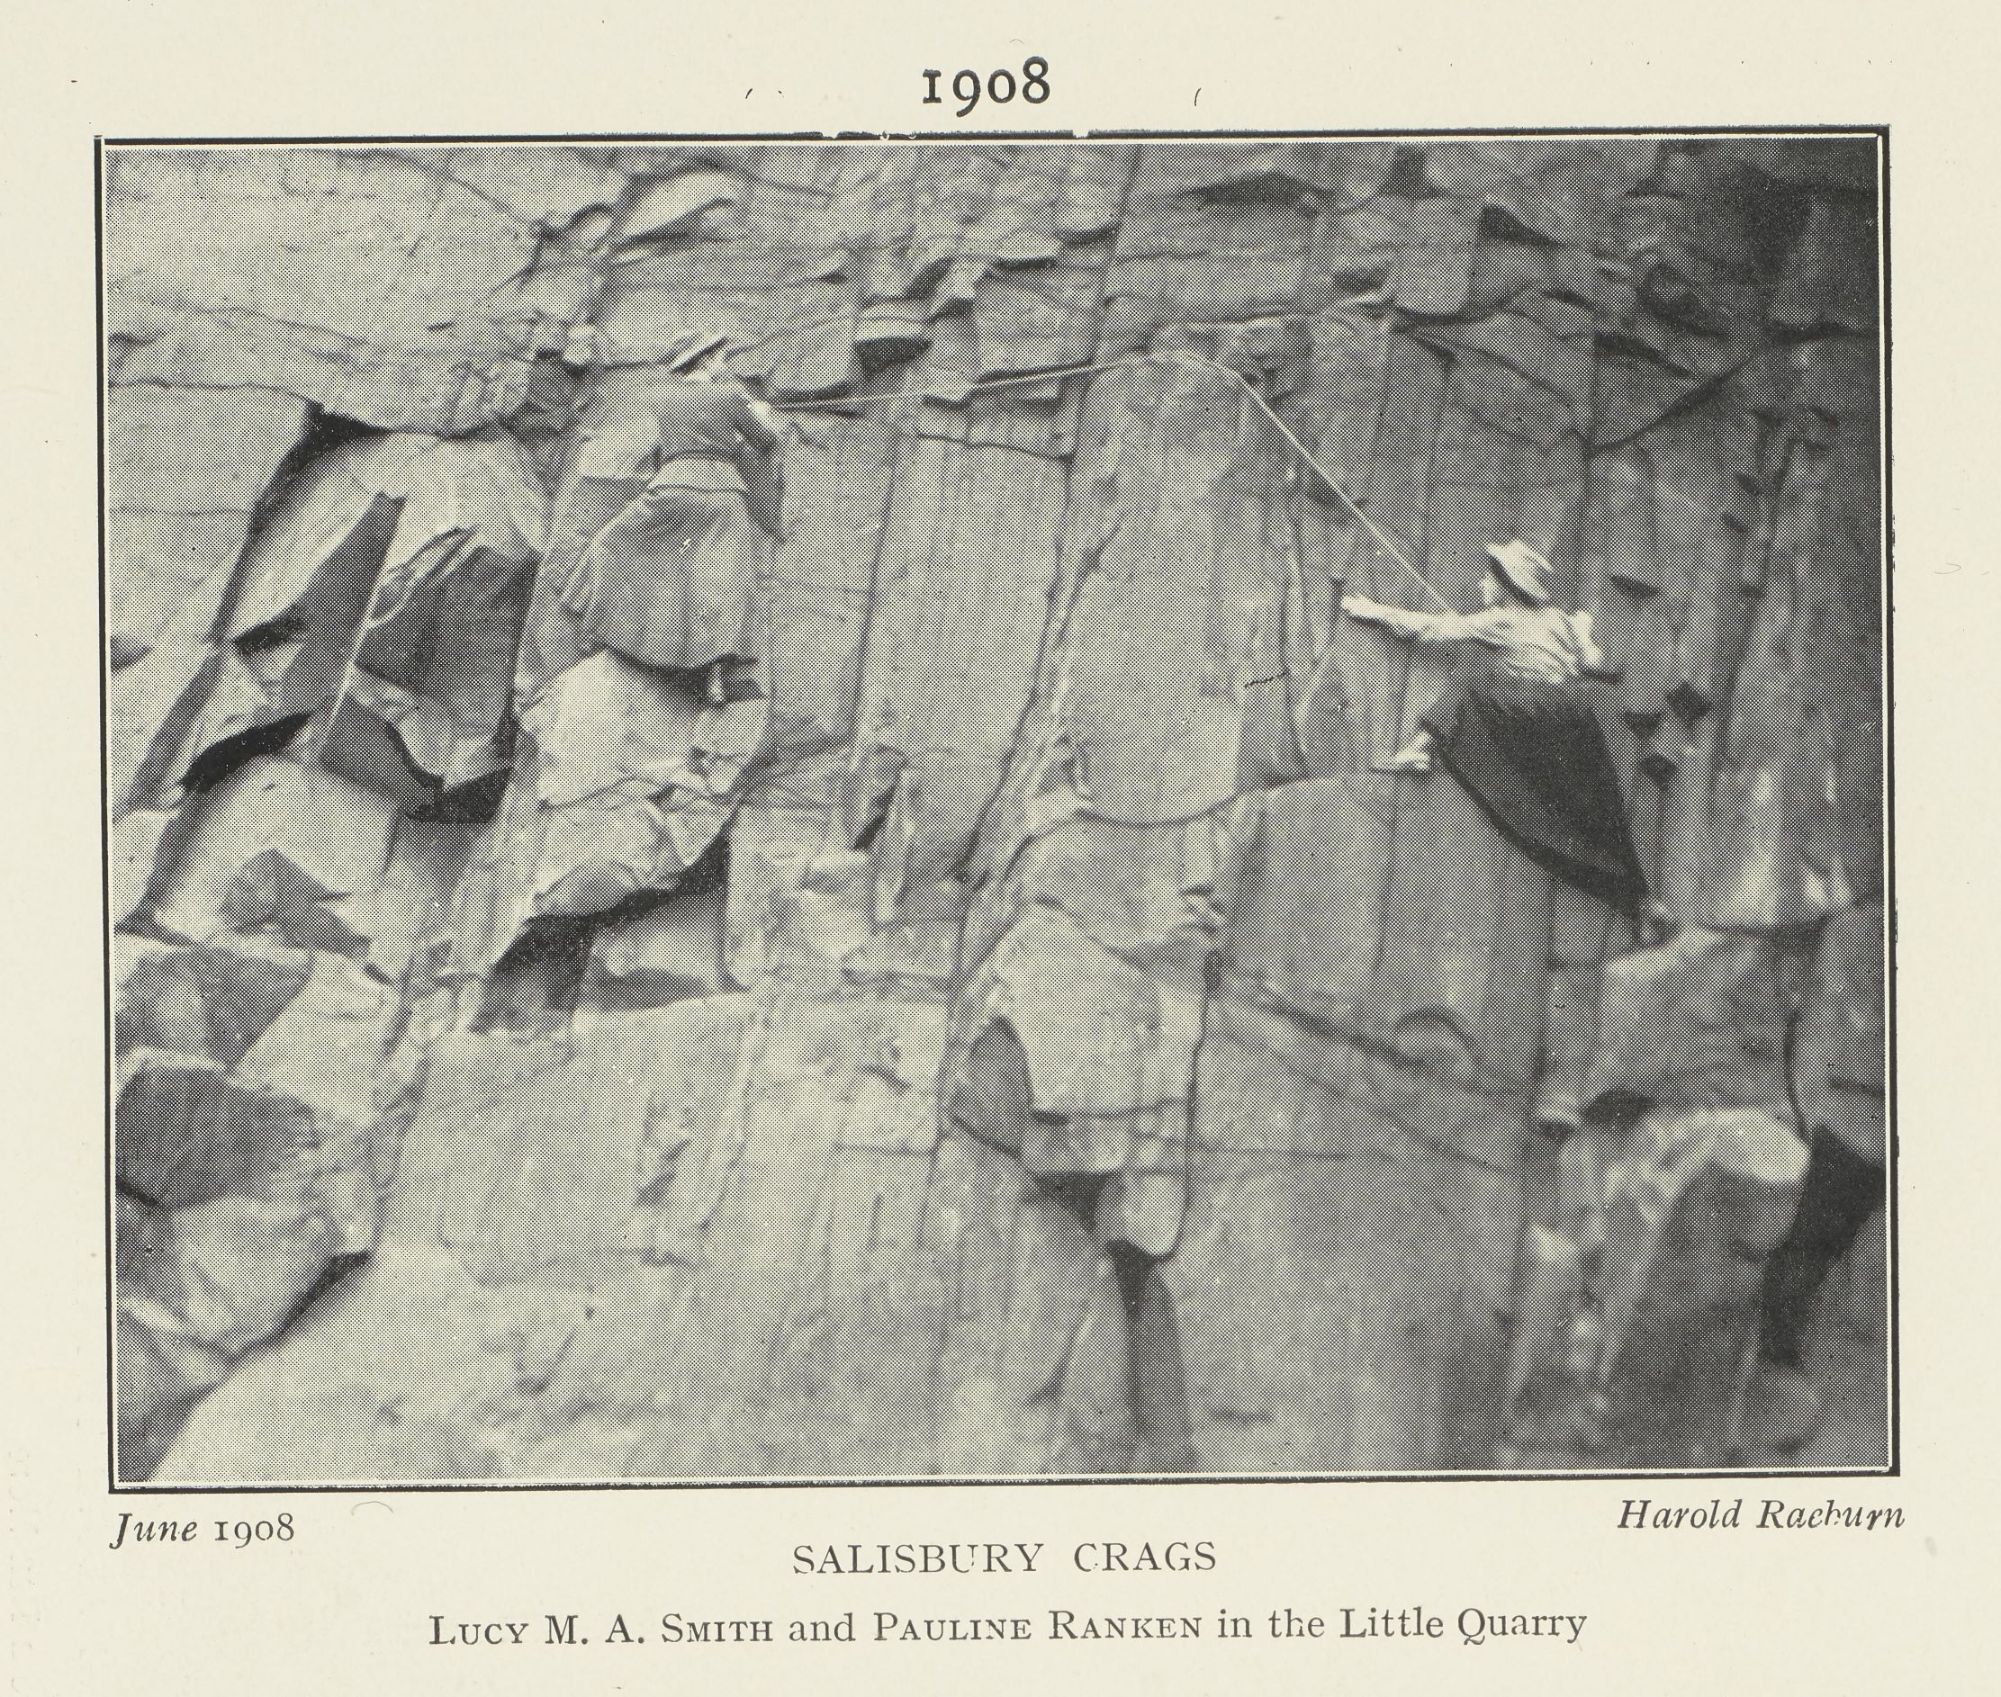 Petticoats and Pinnacles - Scotland's Pioneering Mountain Women - history of Scottish women in mountaineering